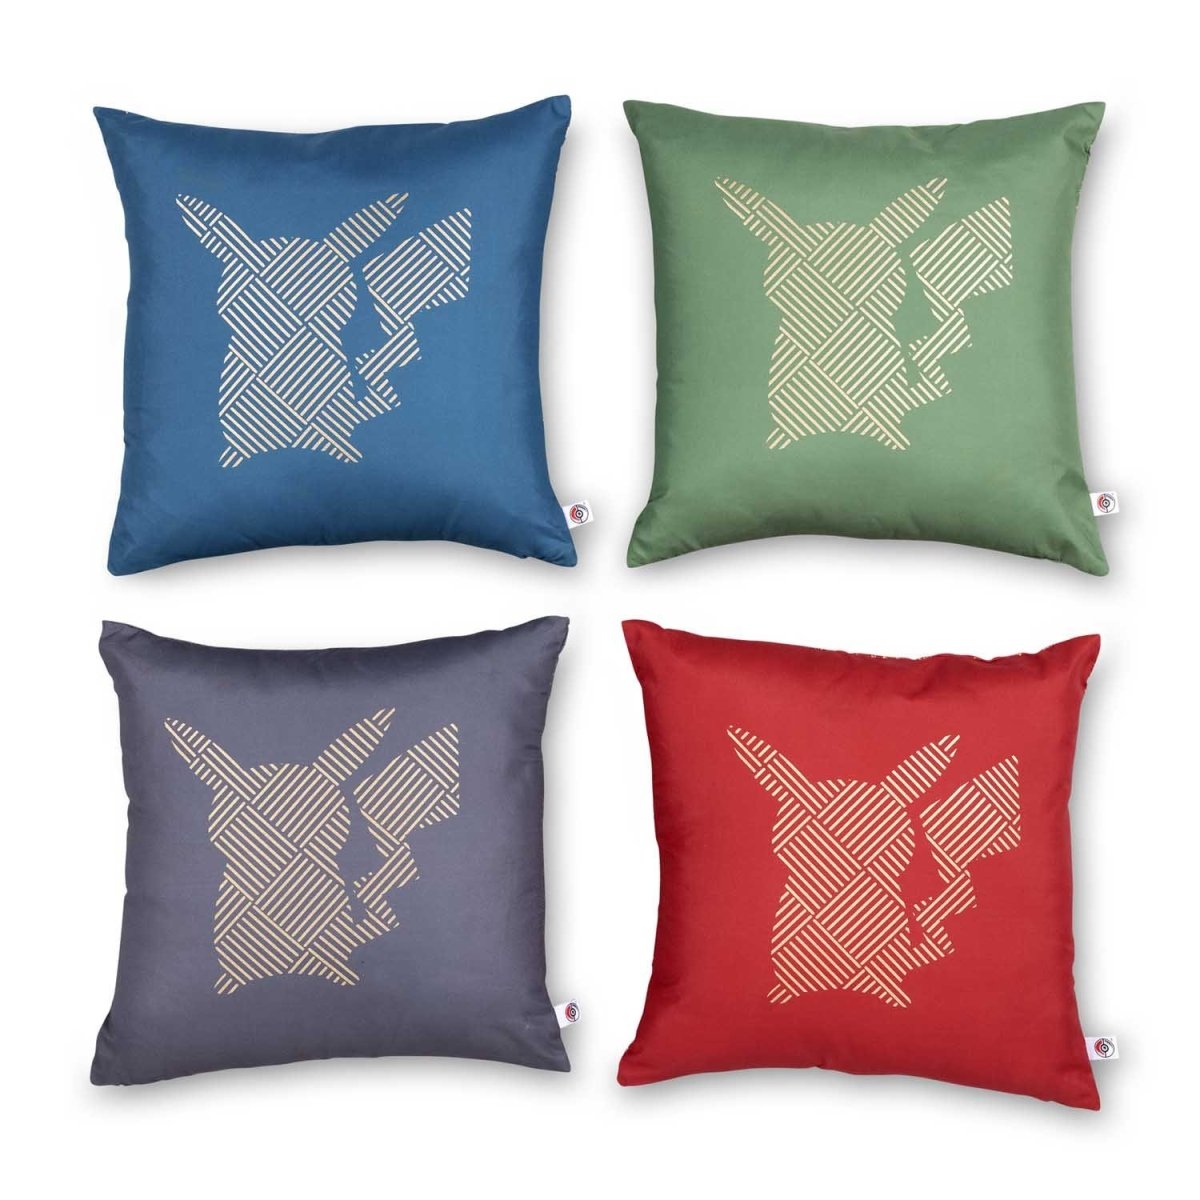 Pokémon Winter Wonders Pillow Covers (4-Pack)